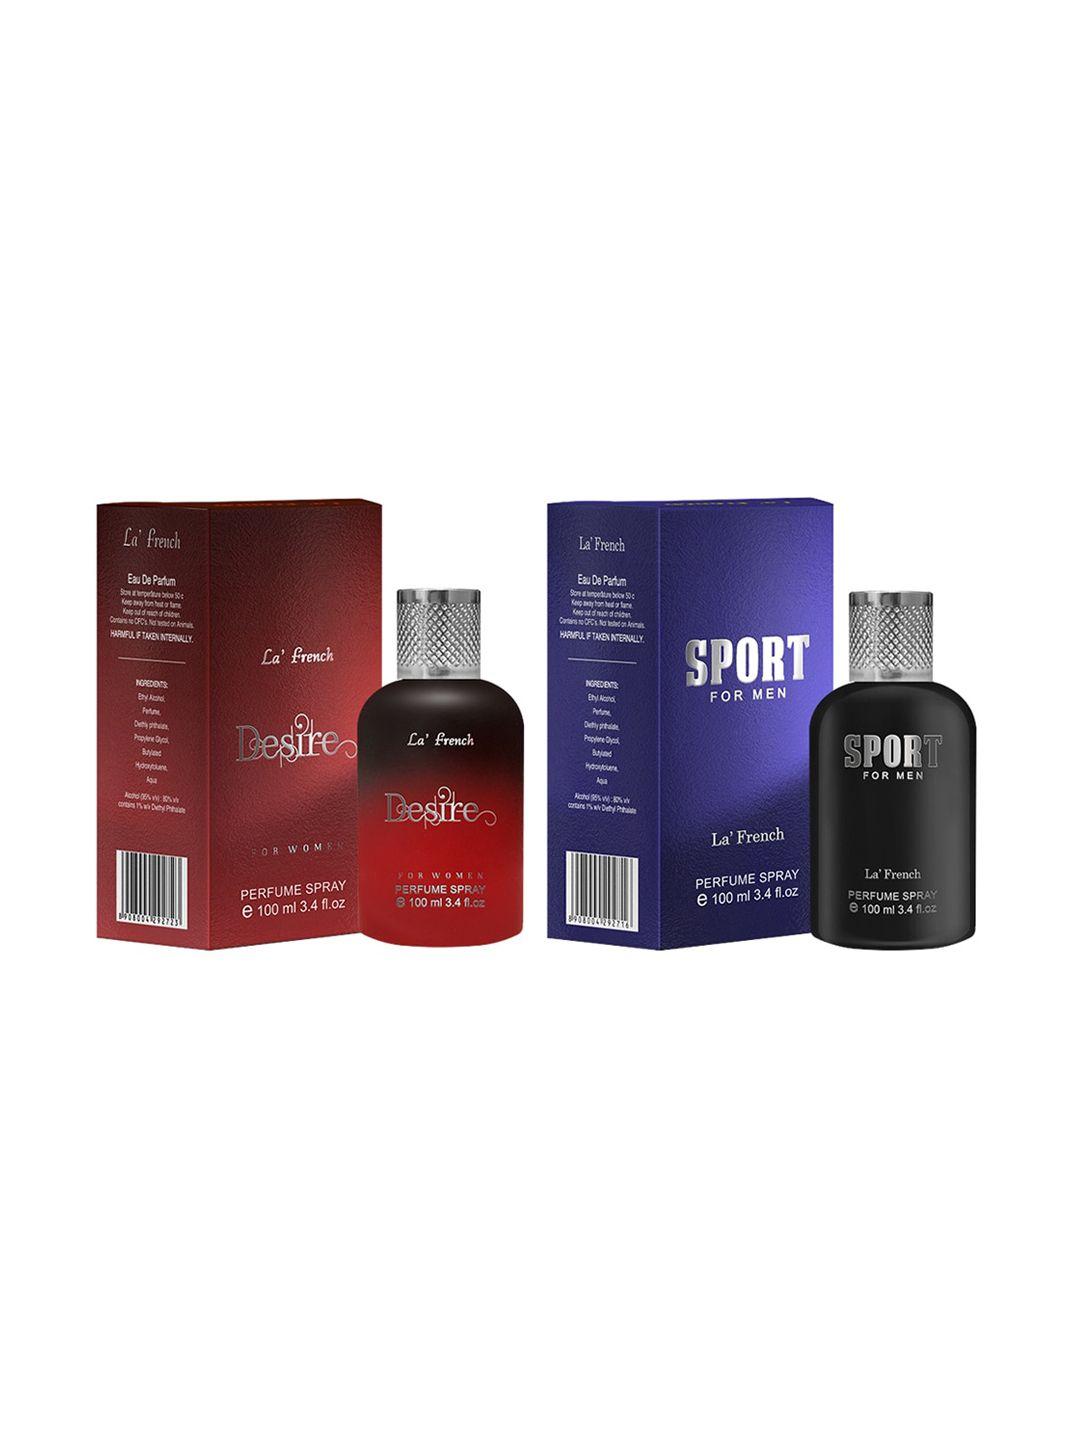 la french set of women desire & men sport perfume - 100ml each